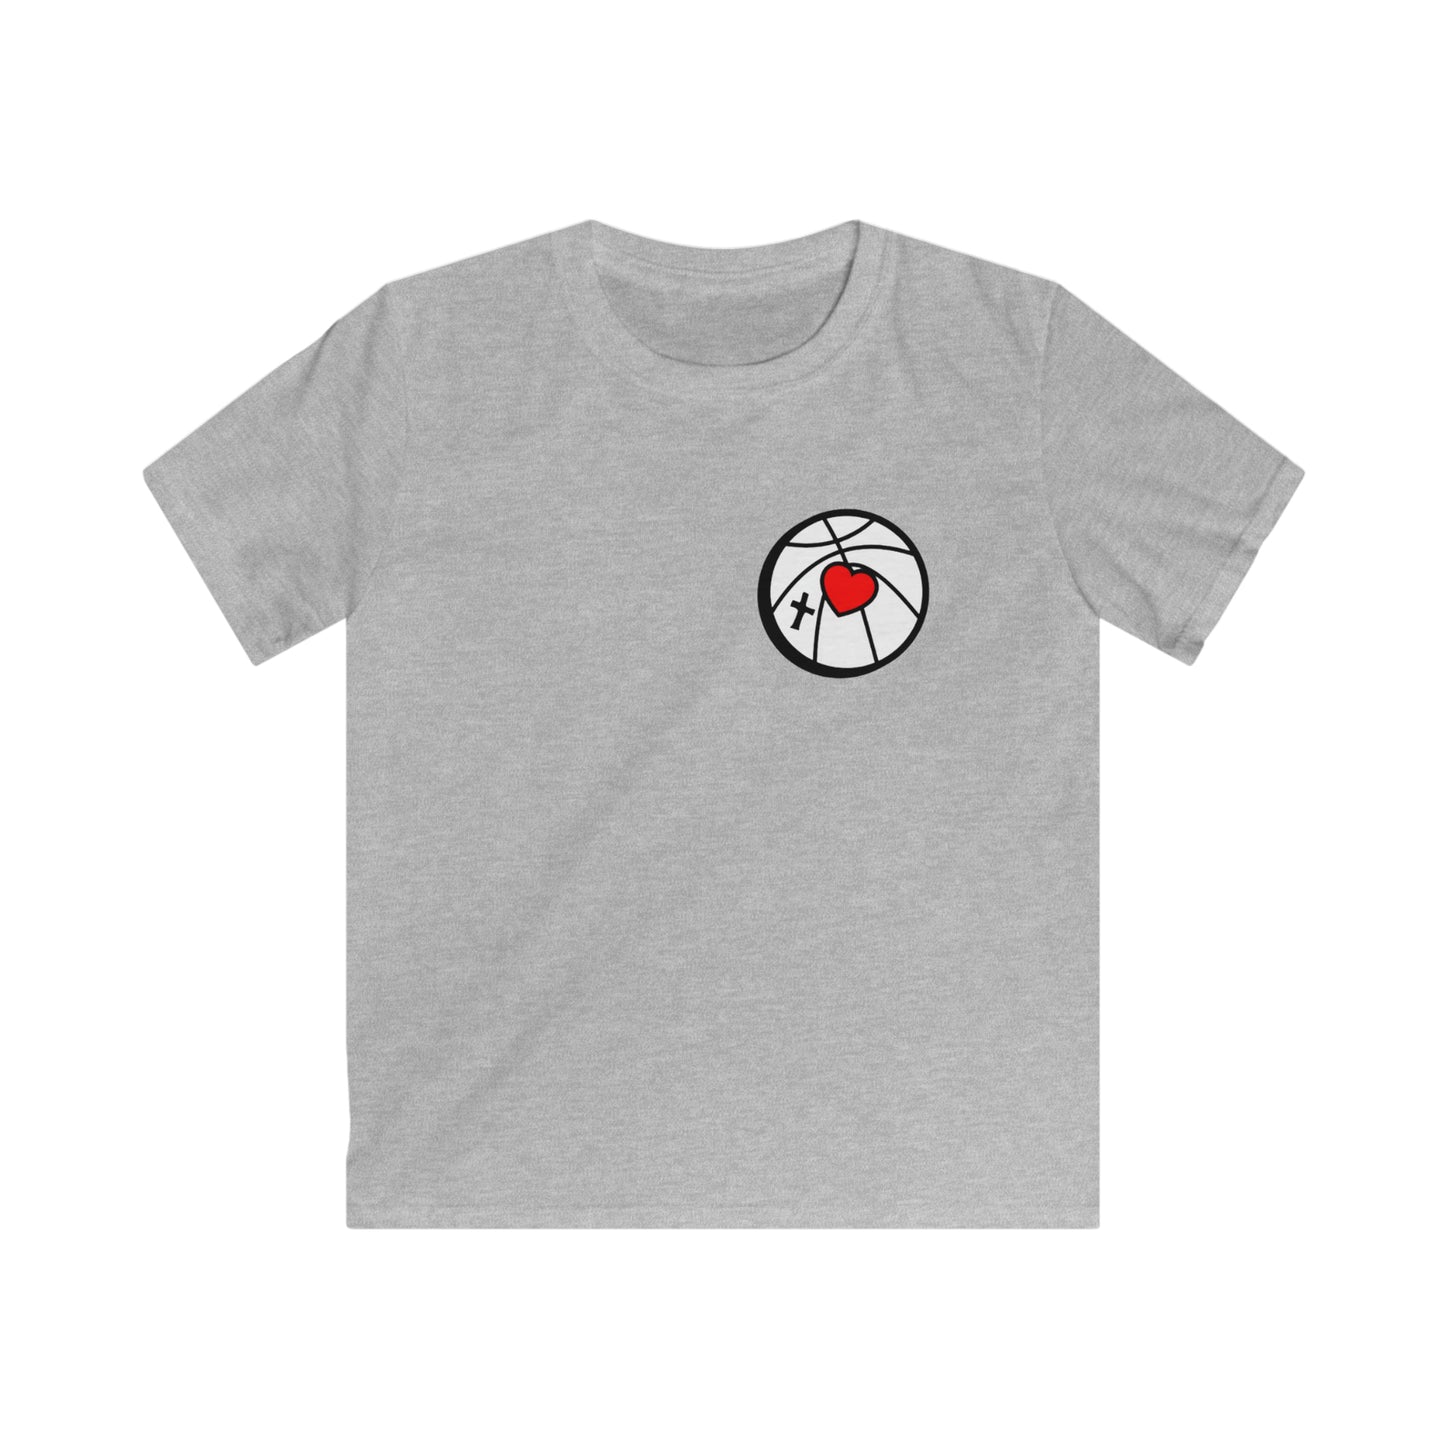 Kids Hoop Valley T-shirt White Logo